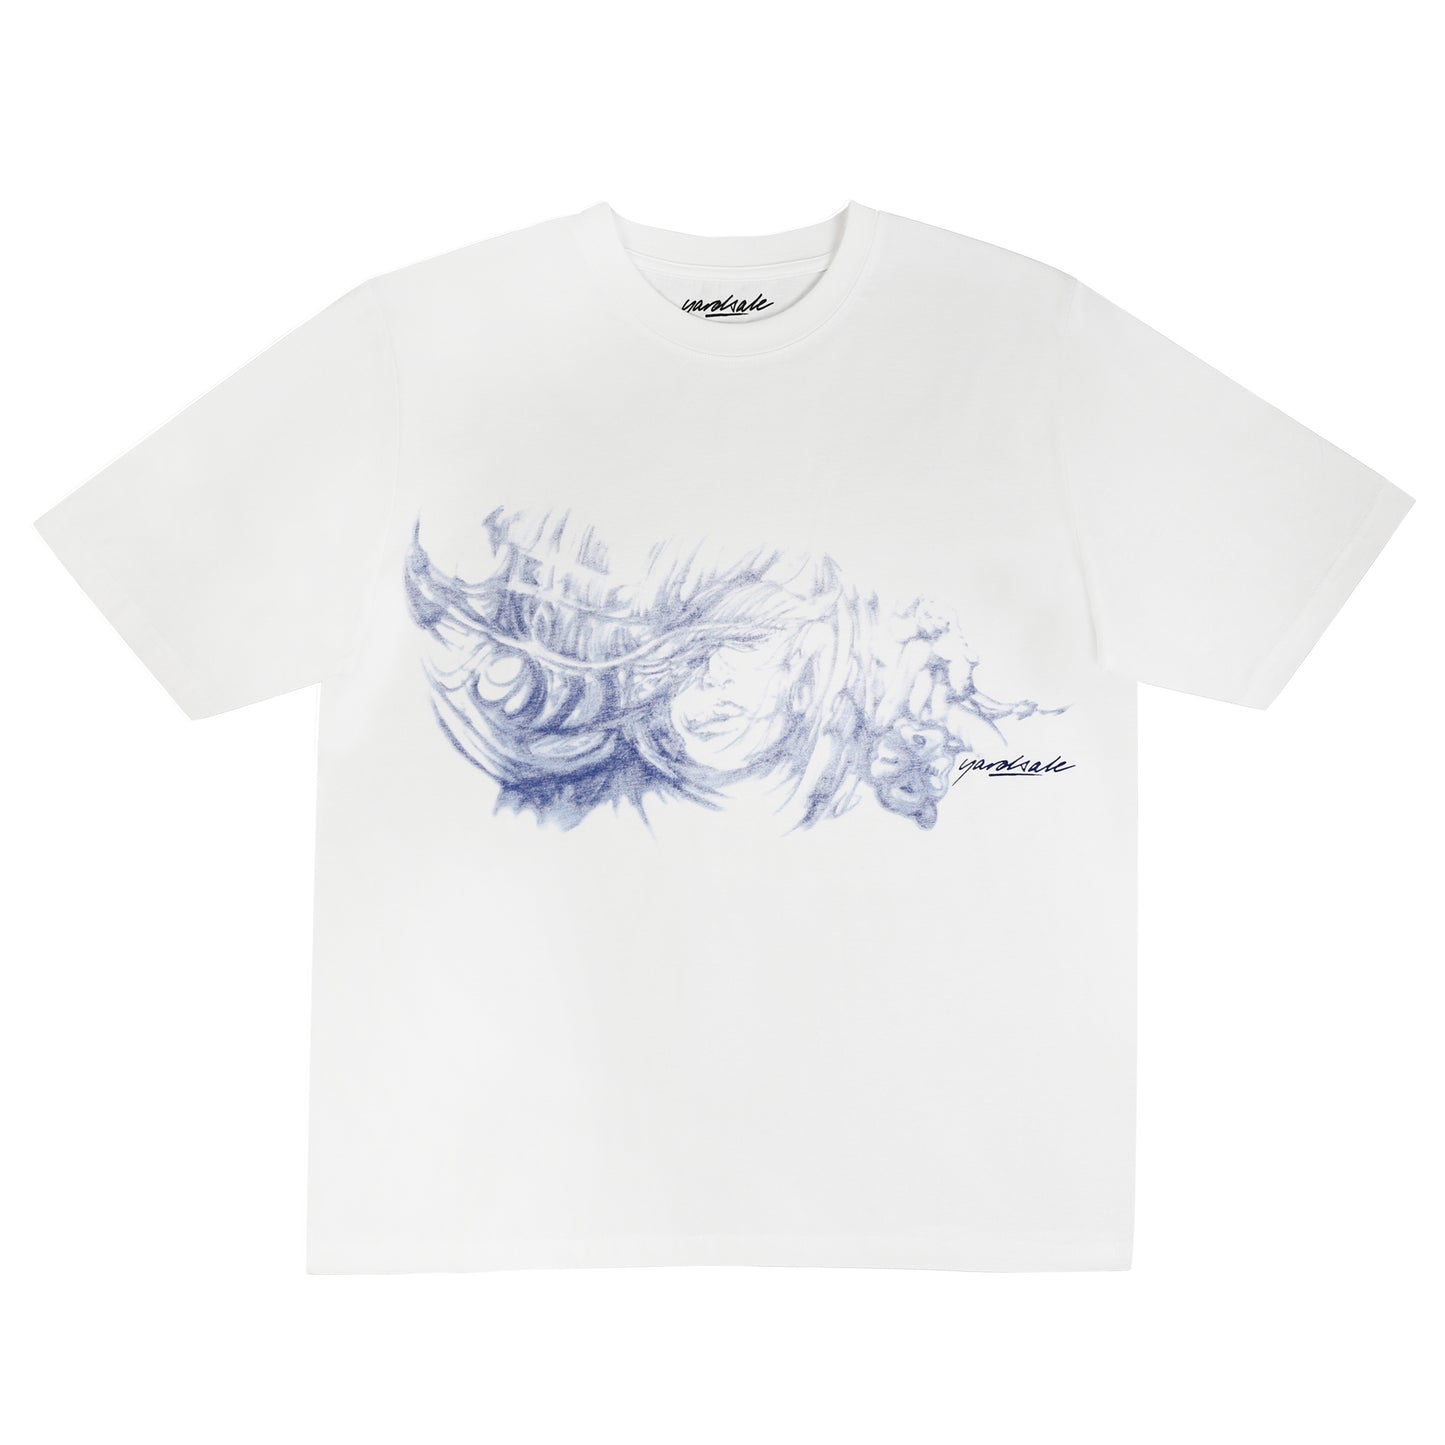 Extasz T-Shirt (White)